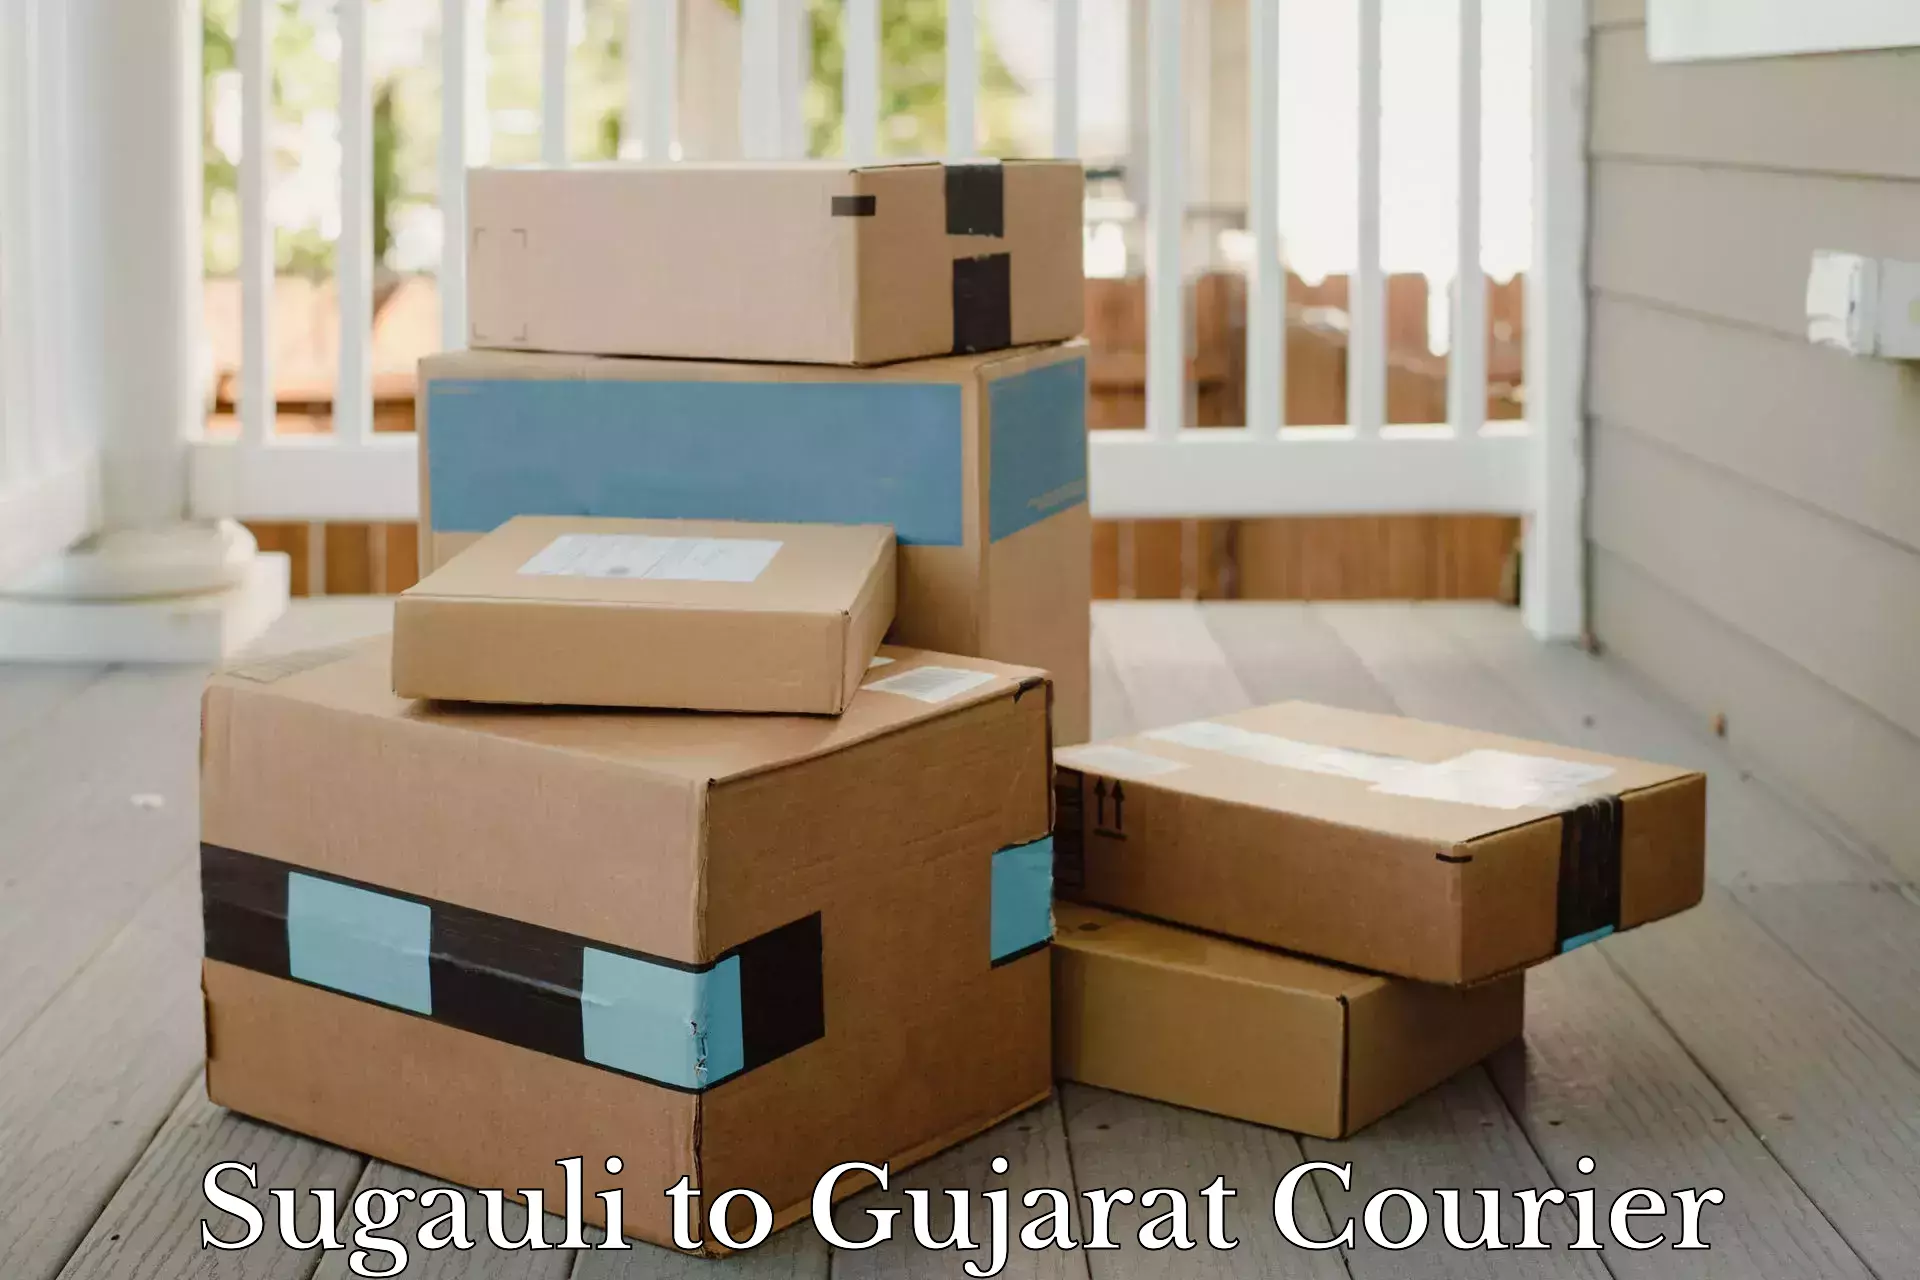 Efficient order fulfillment Sugauli to Gujarat